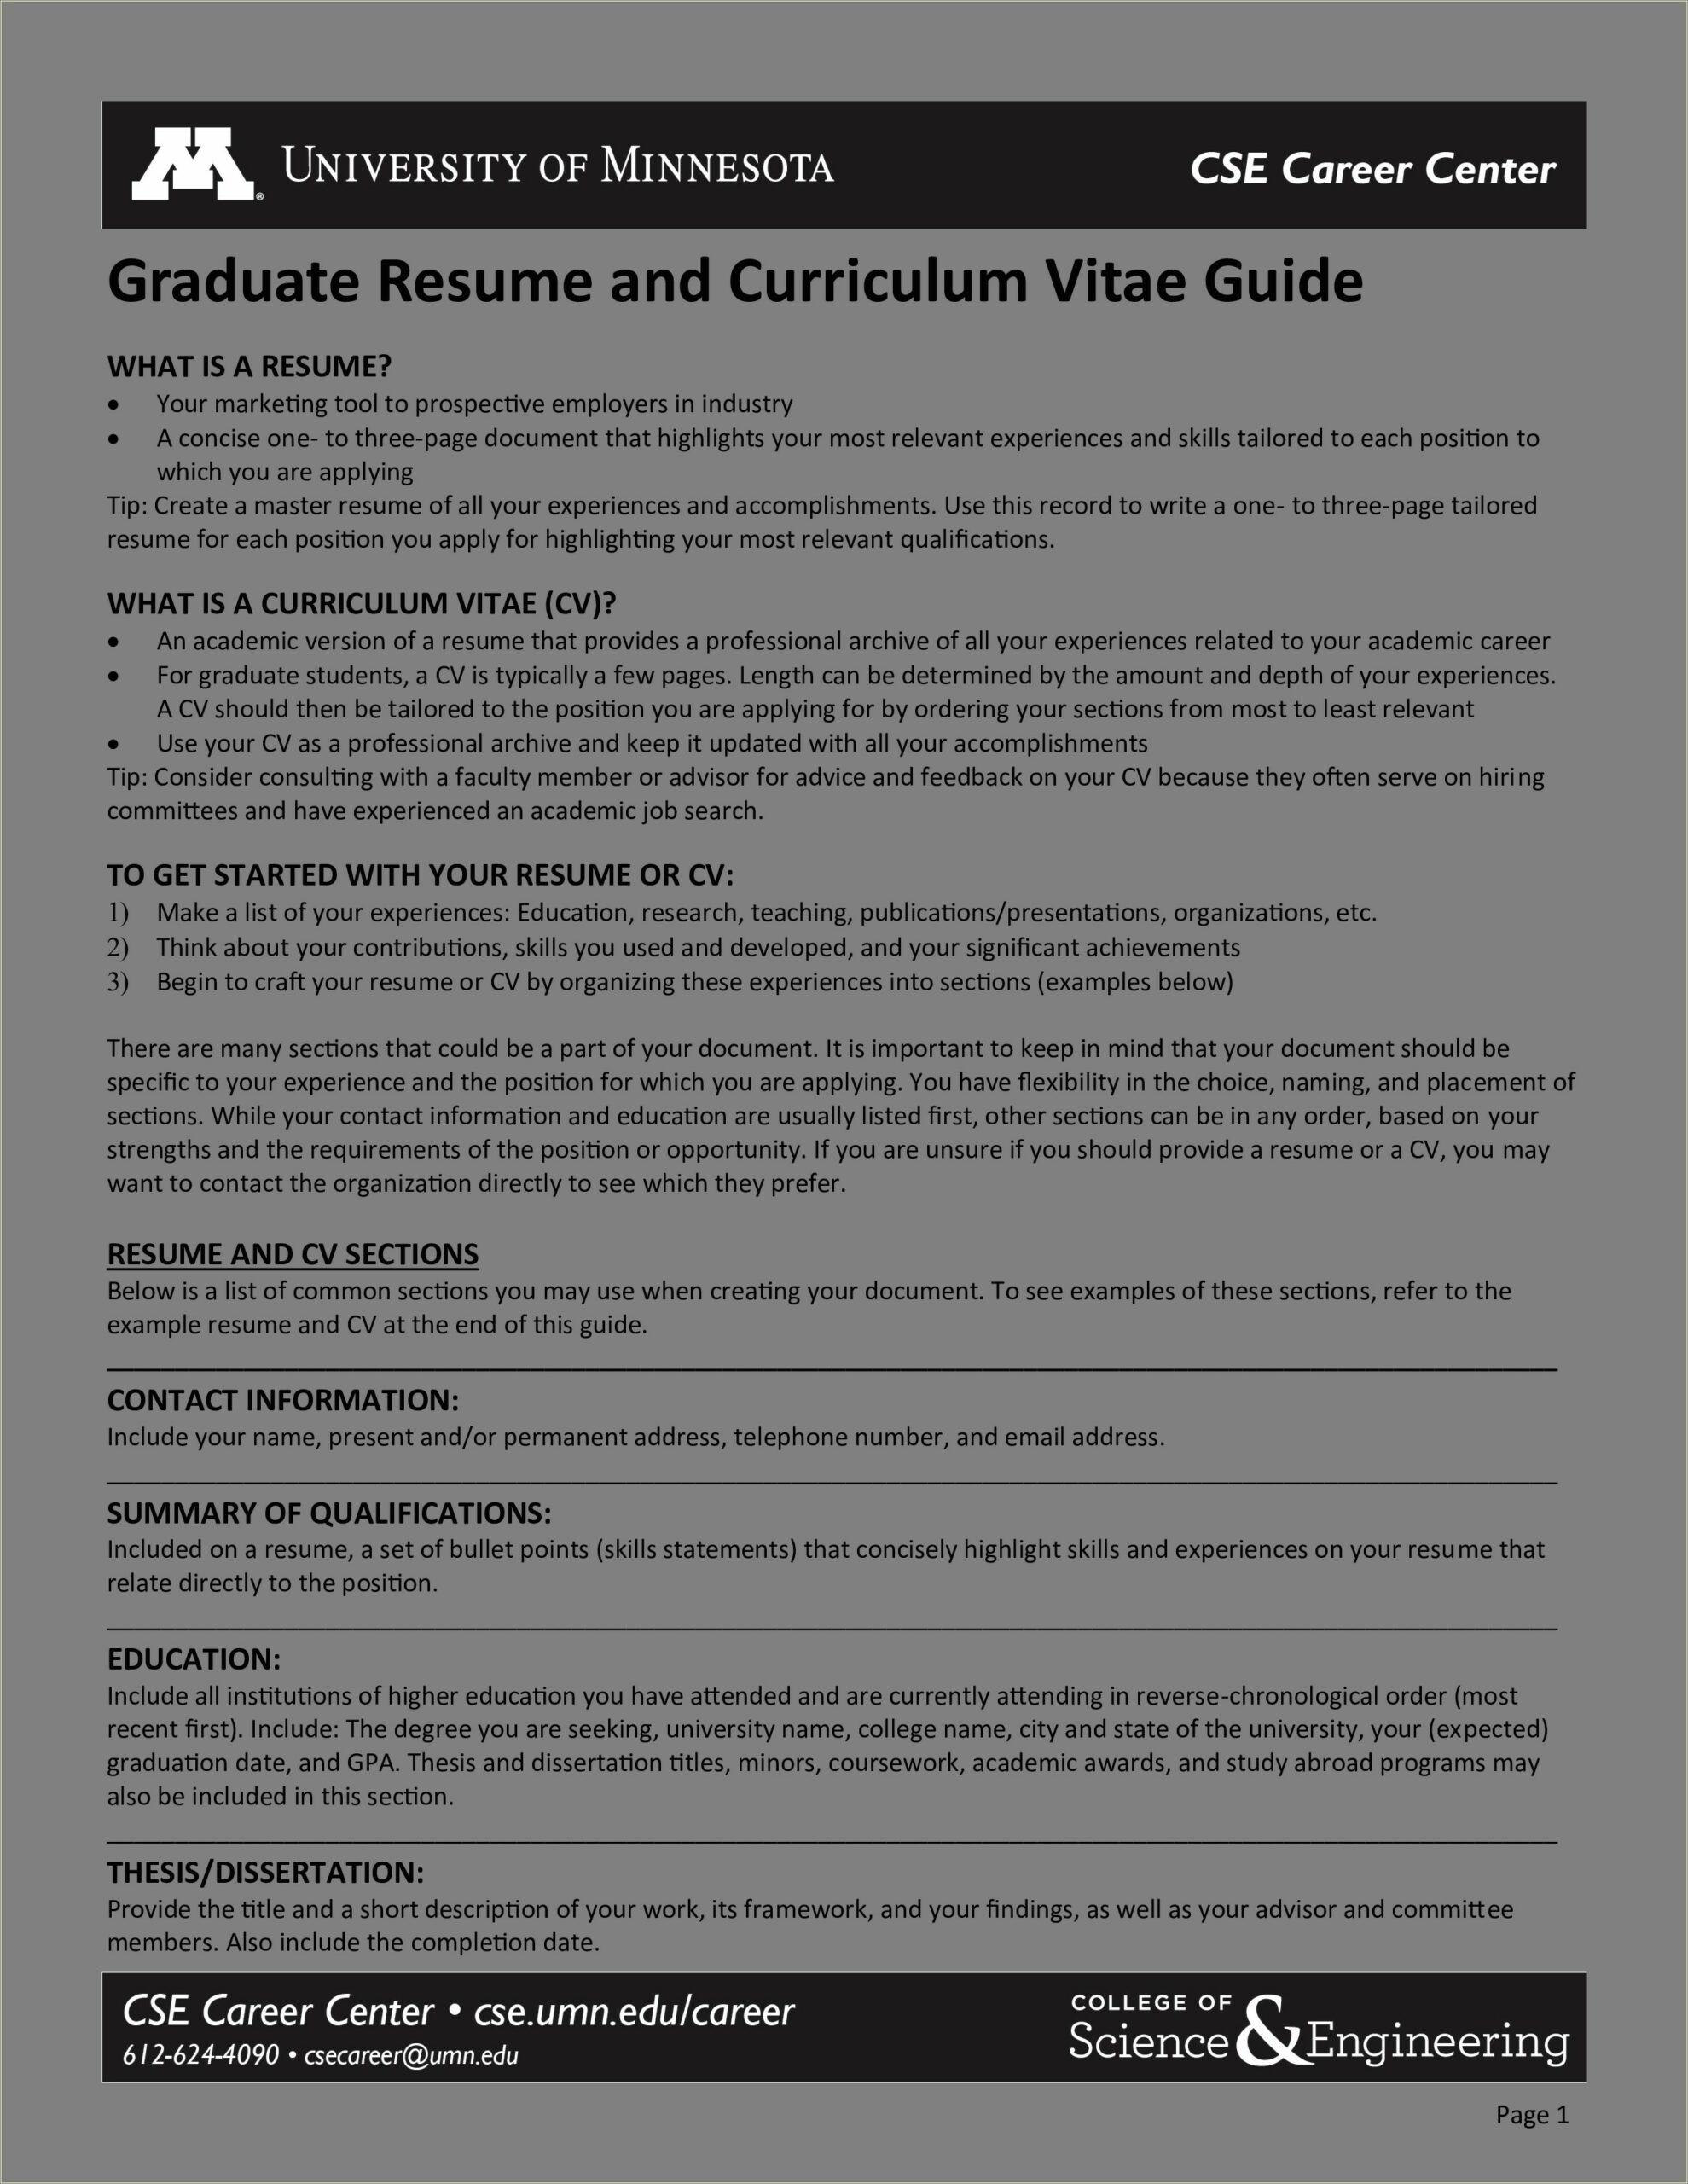 Resume For Recent College Graduate Examples